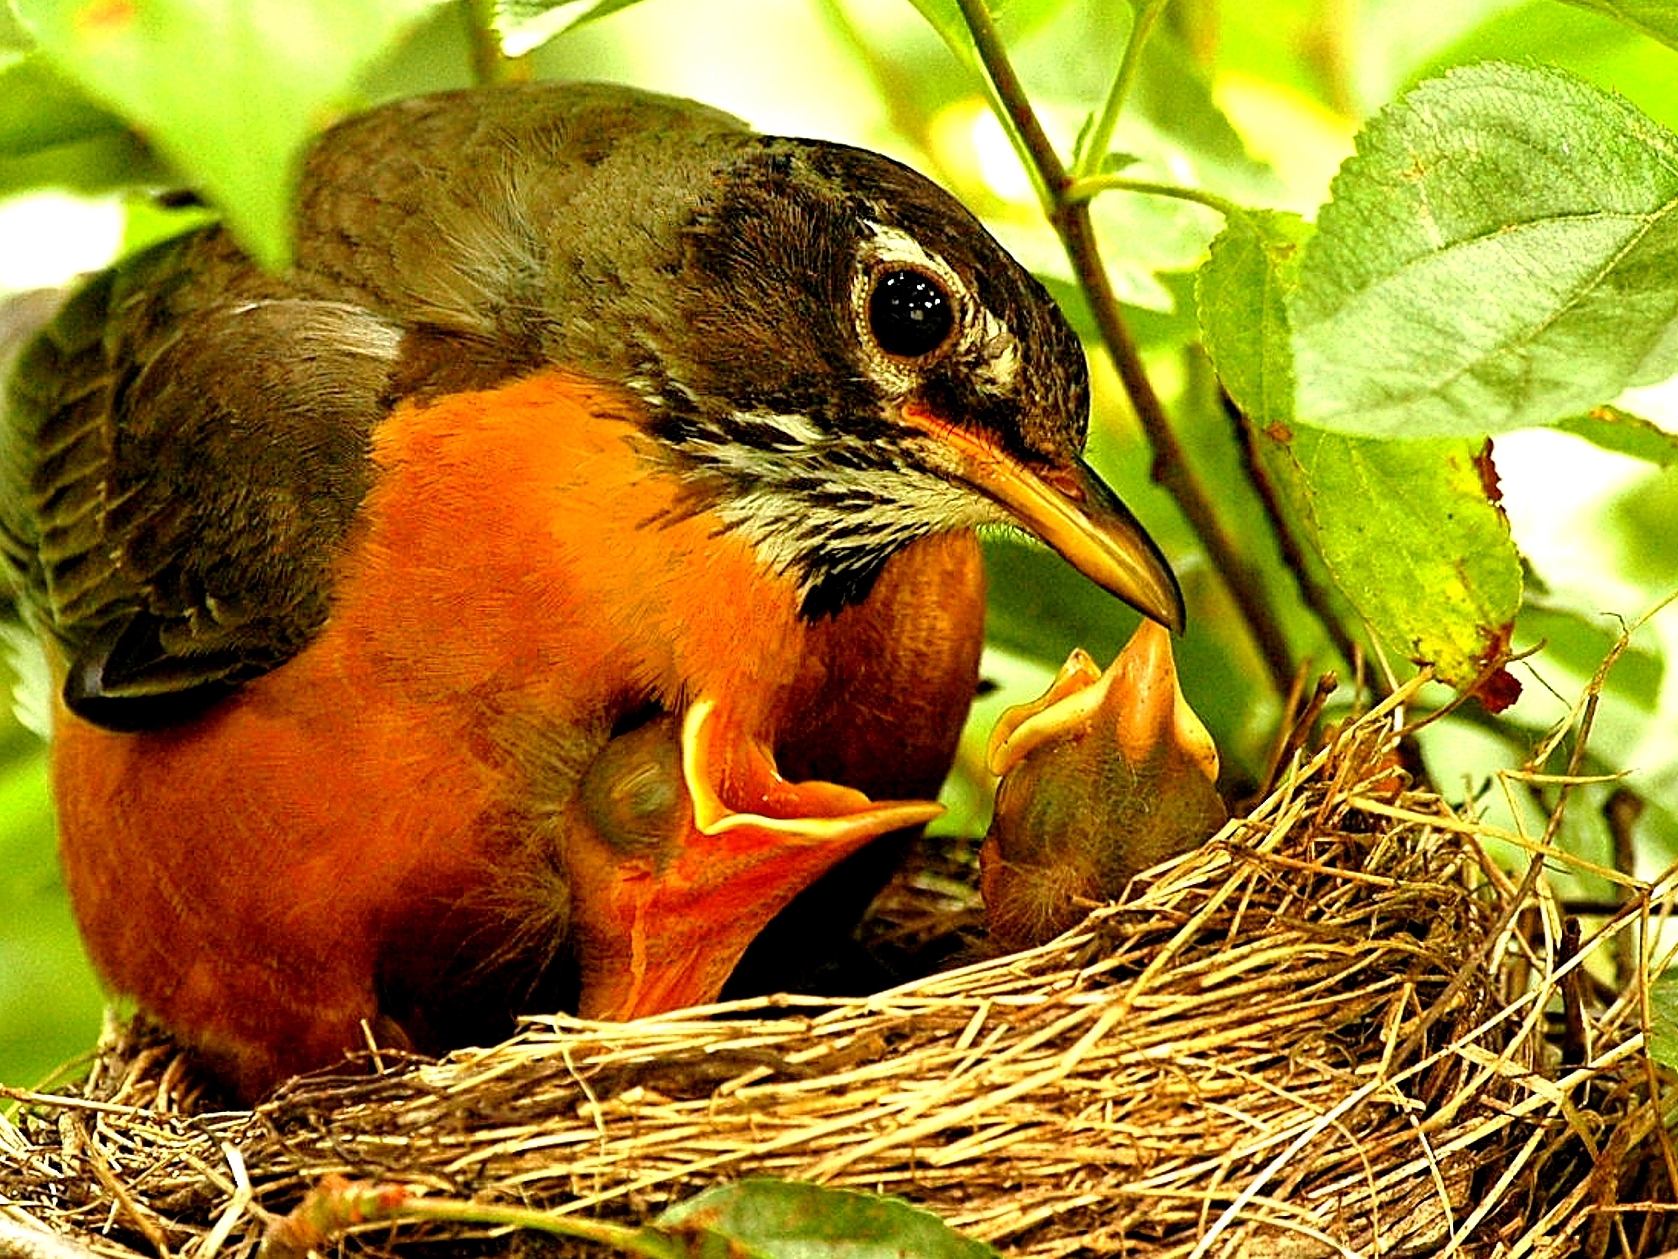 Avian architects weave their magic during nesting season - The Boston Globe